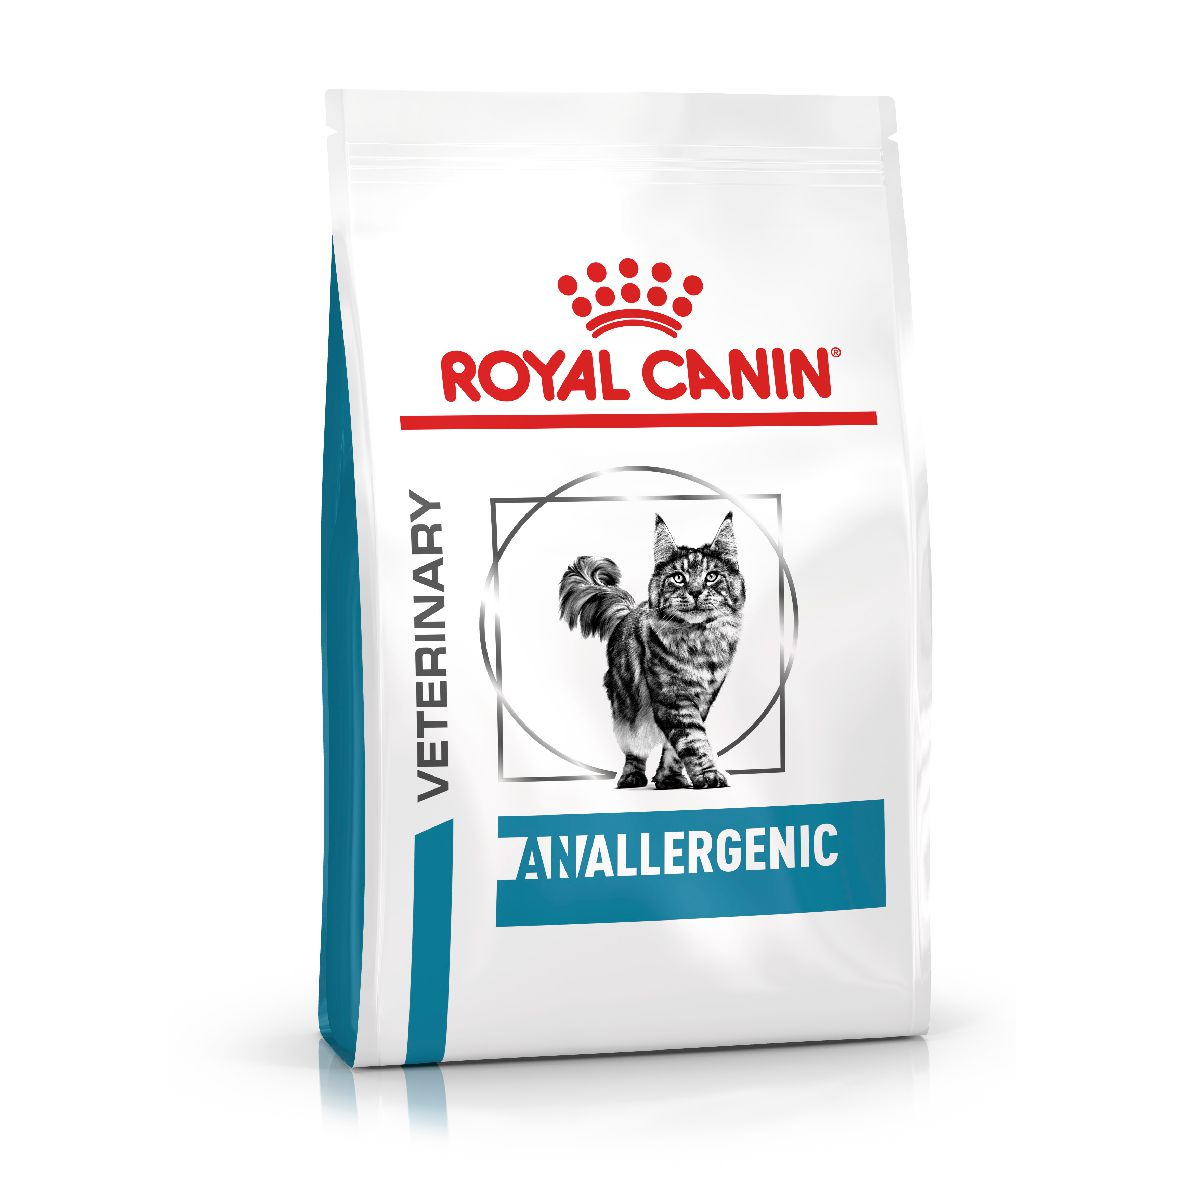 royal canin anallergenic dog food